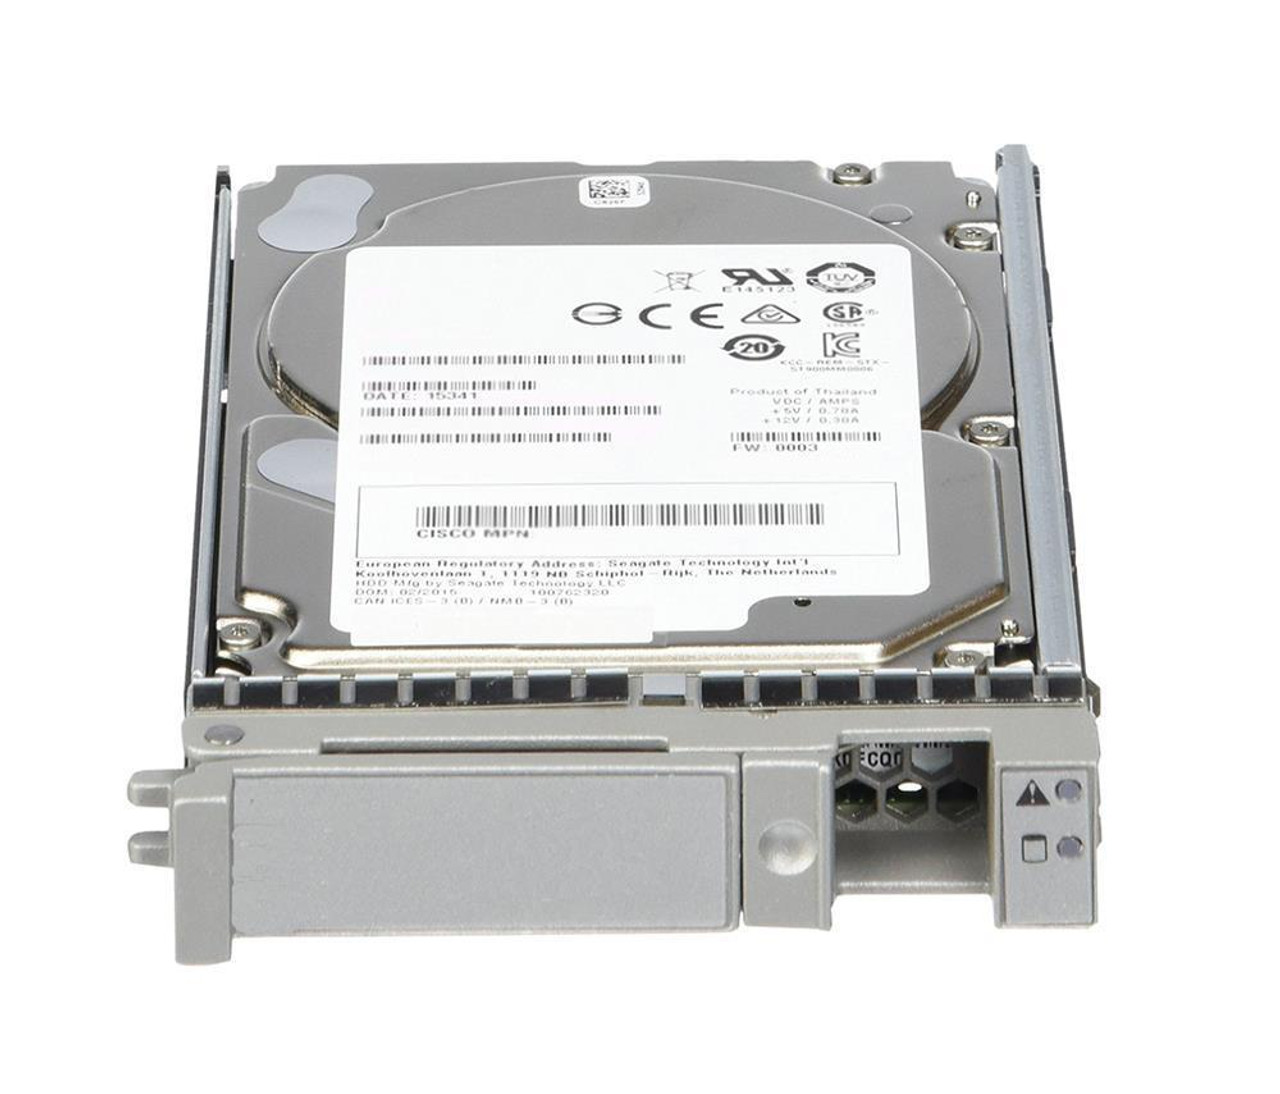 Cisco 14TB 7200RPM SAS 12Gbps (4K) 3.5-inch Internal Hard Drive